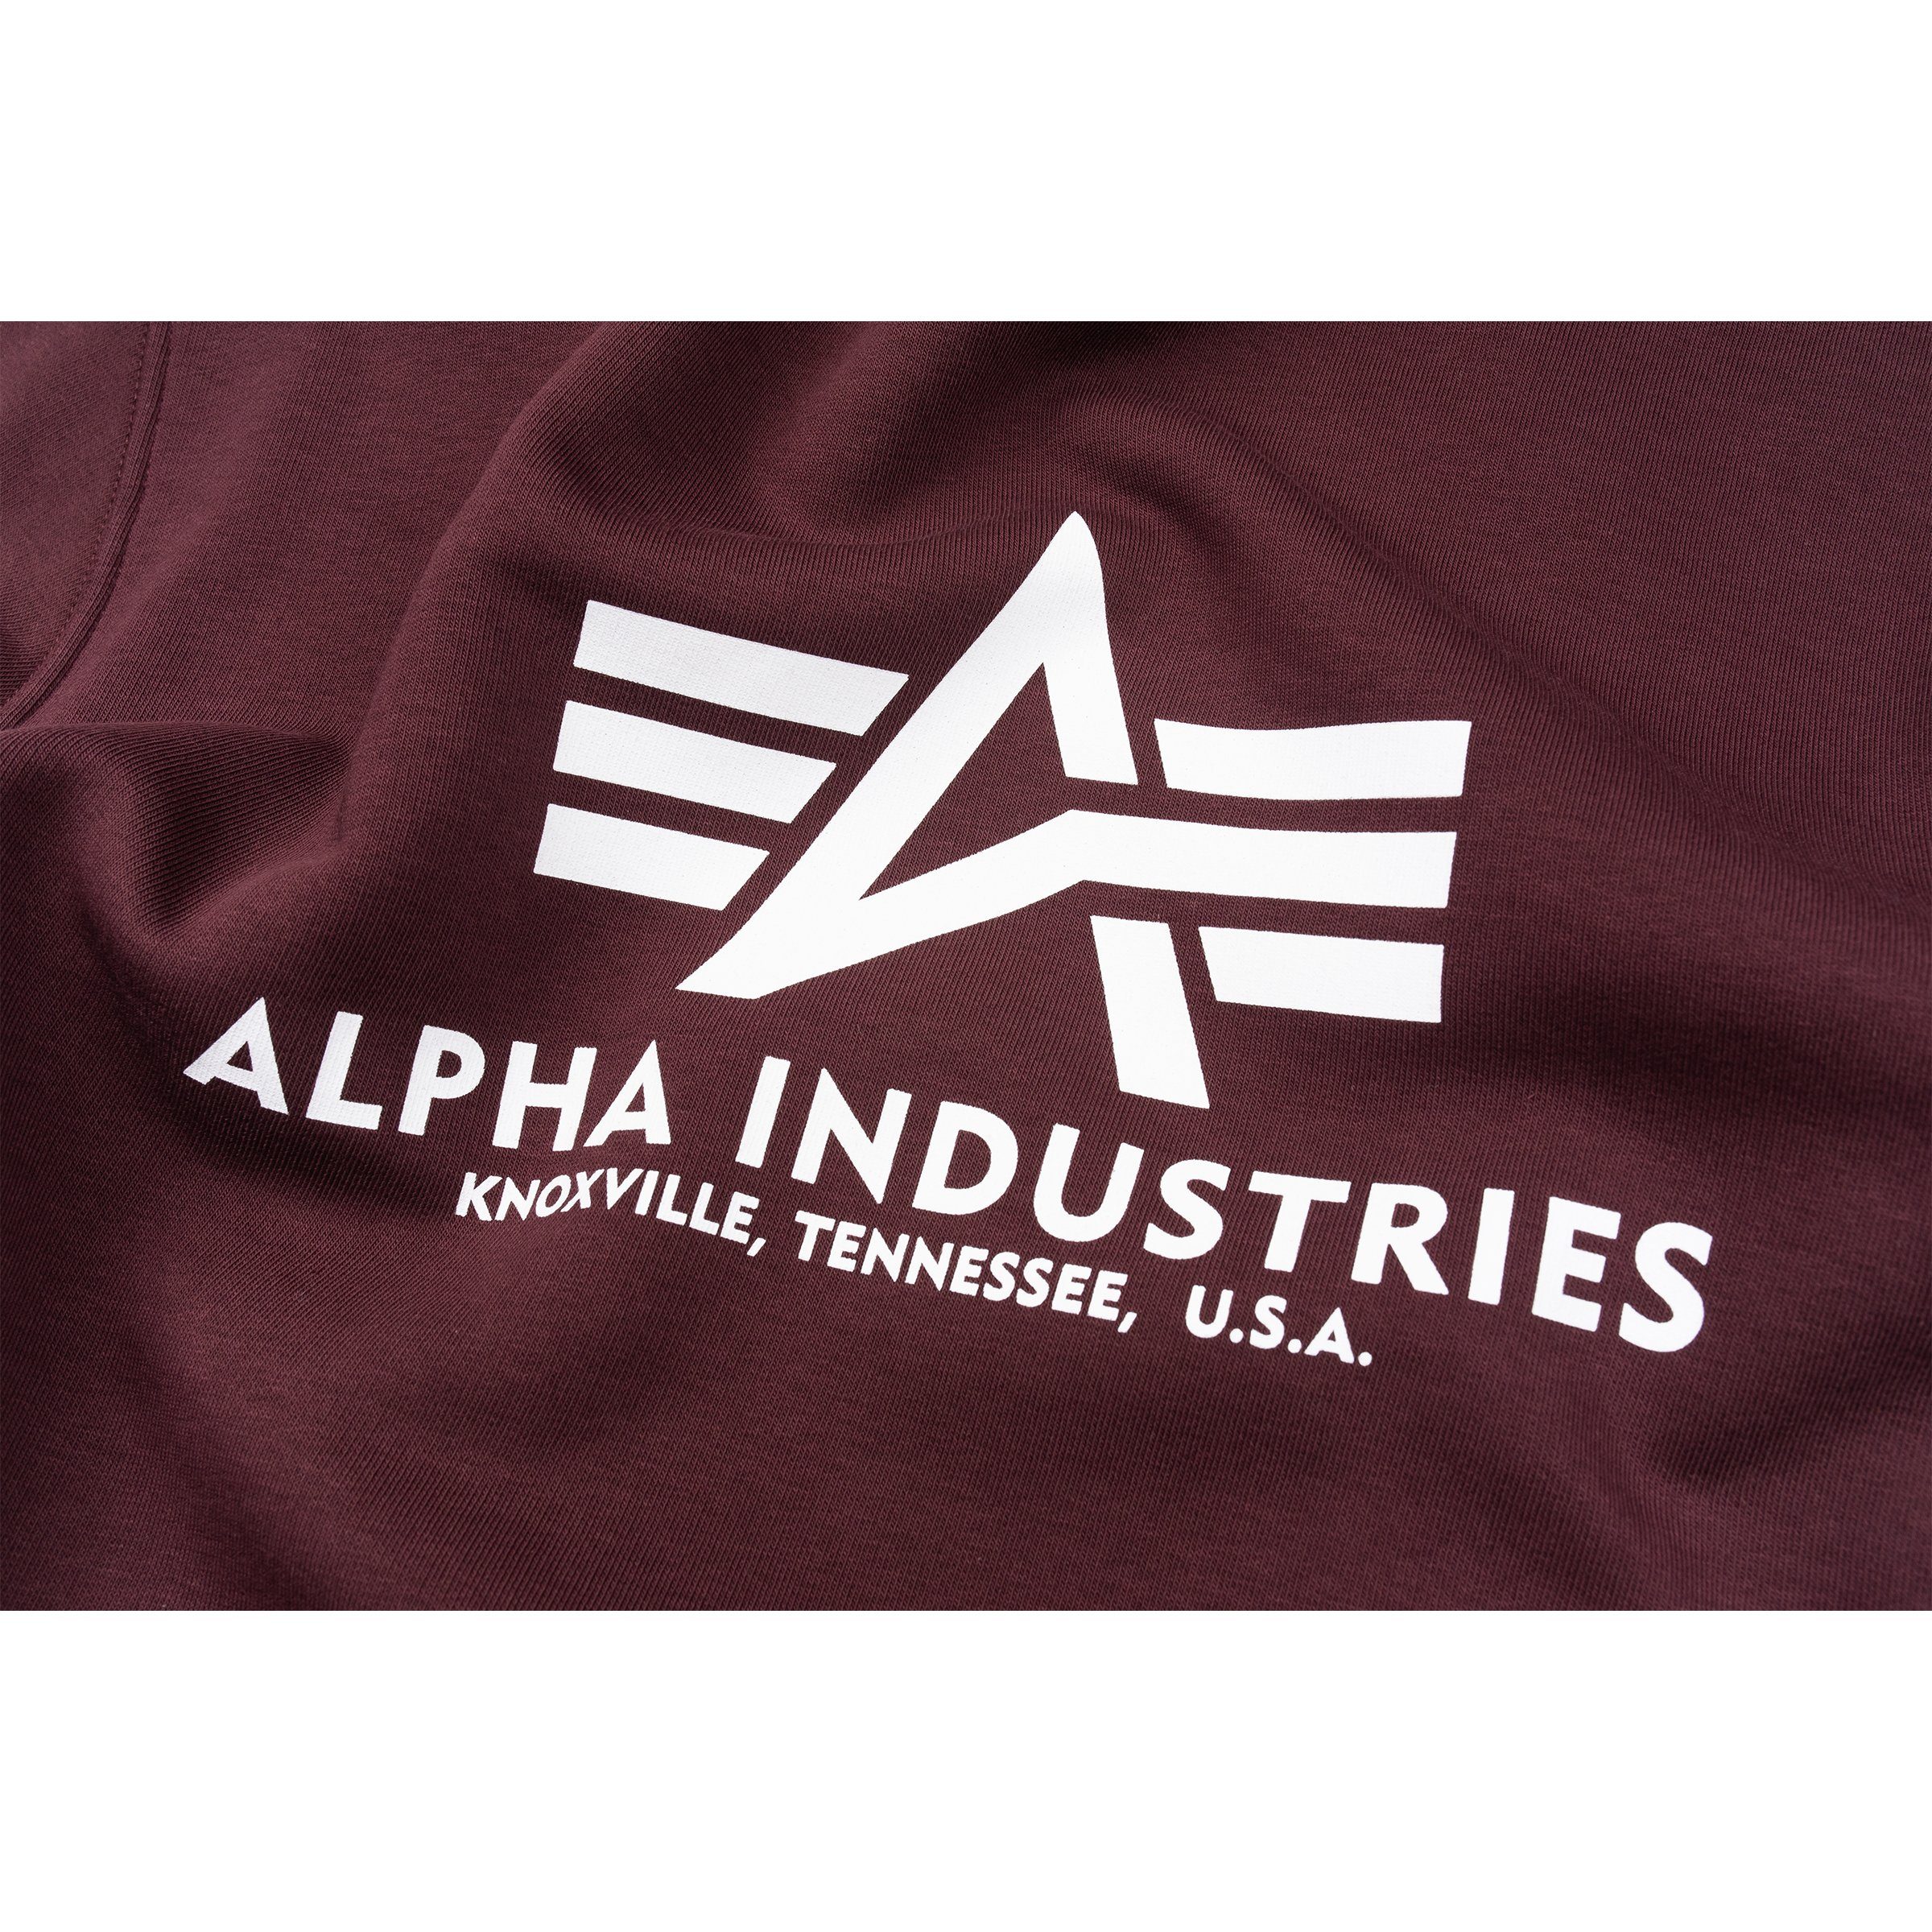 Alpha Industries Alpha Sweatshirt Herren Industries maroon Basic Sweatshirt deep